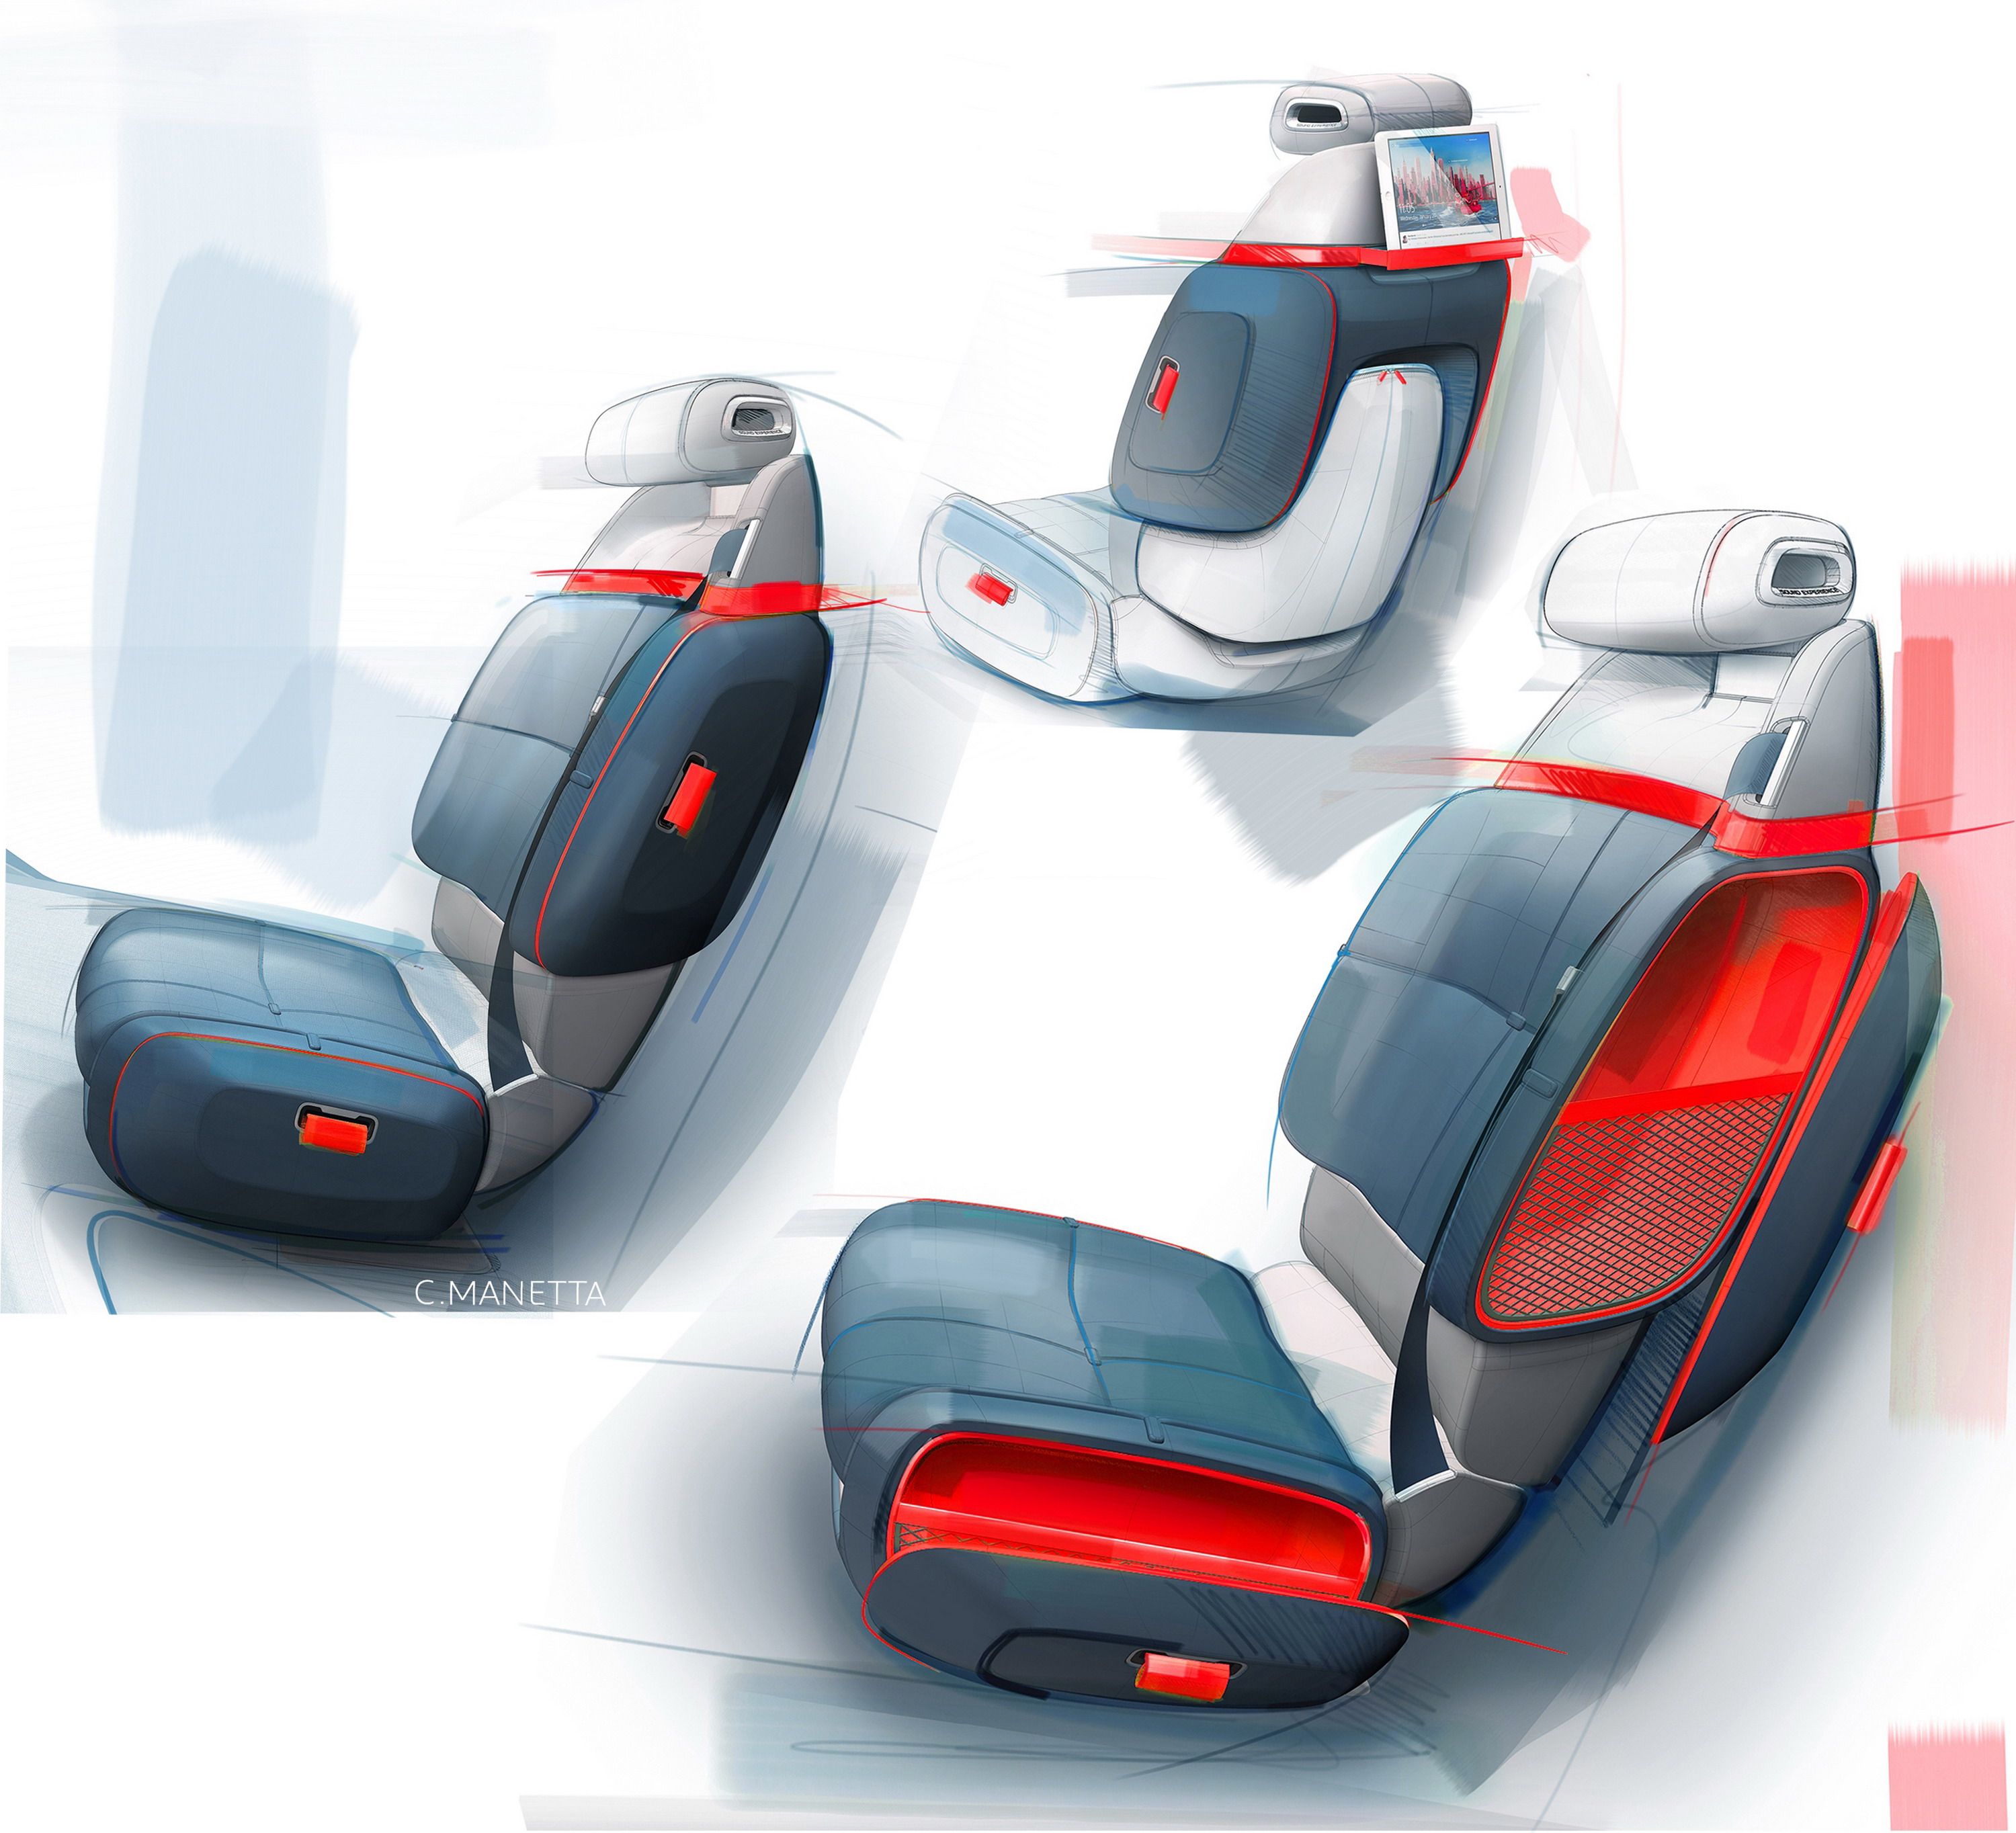 2017 Citroen C-Aircross Concept